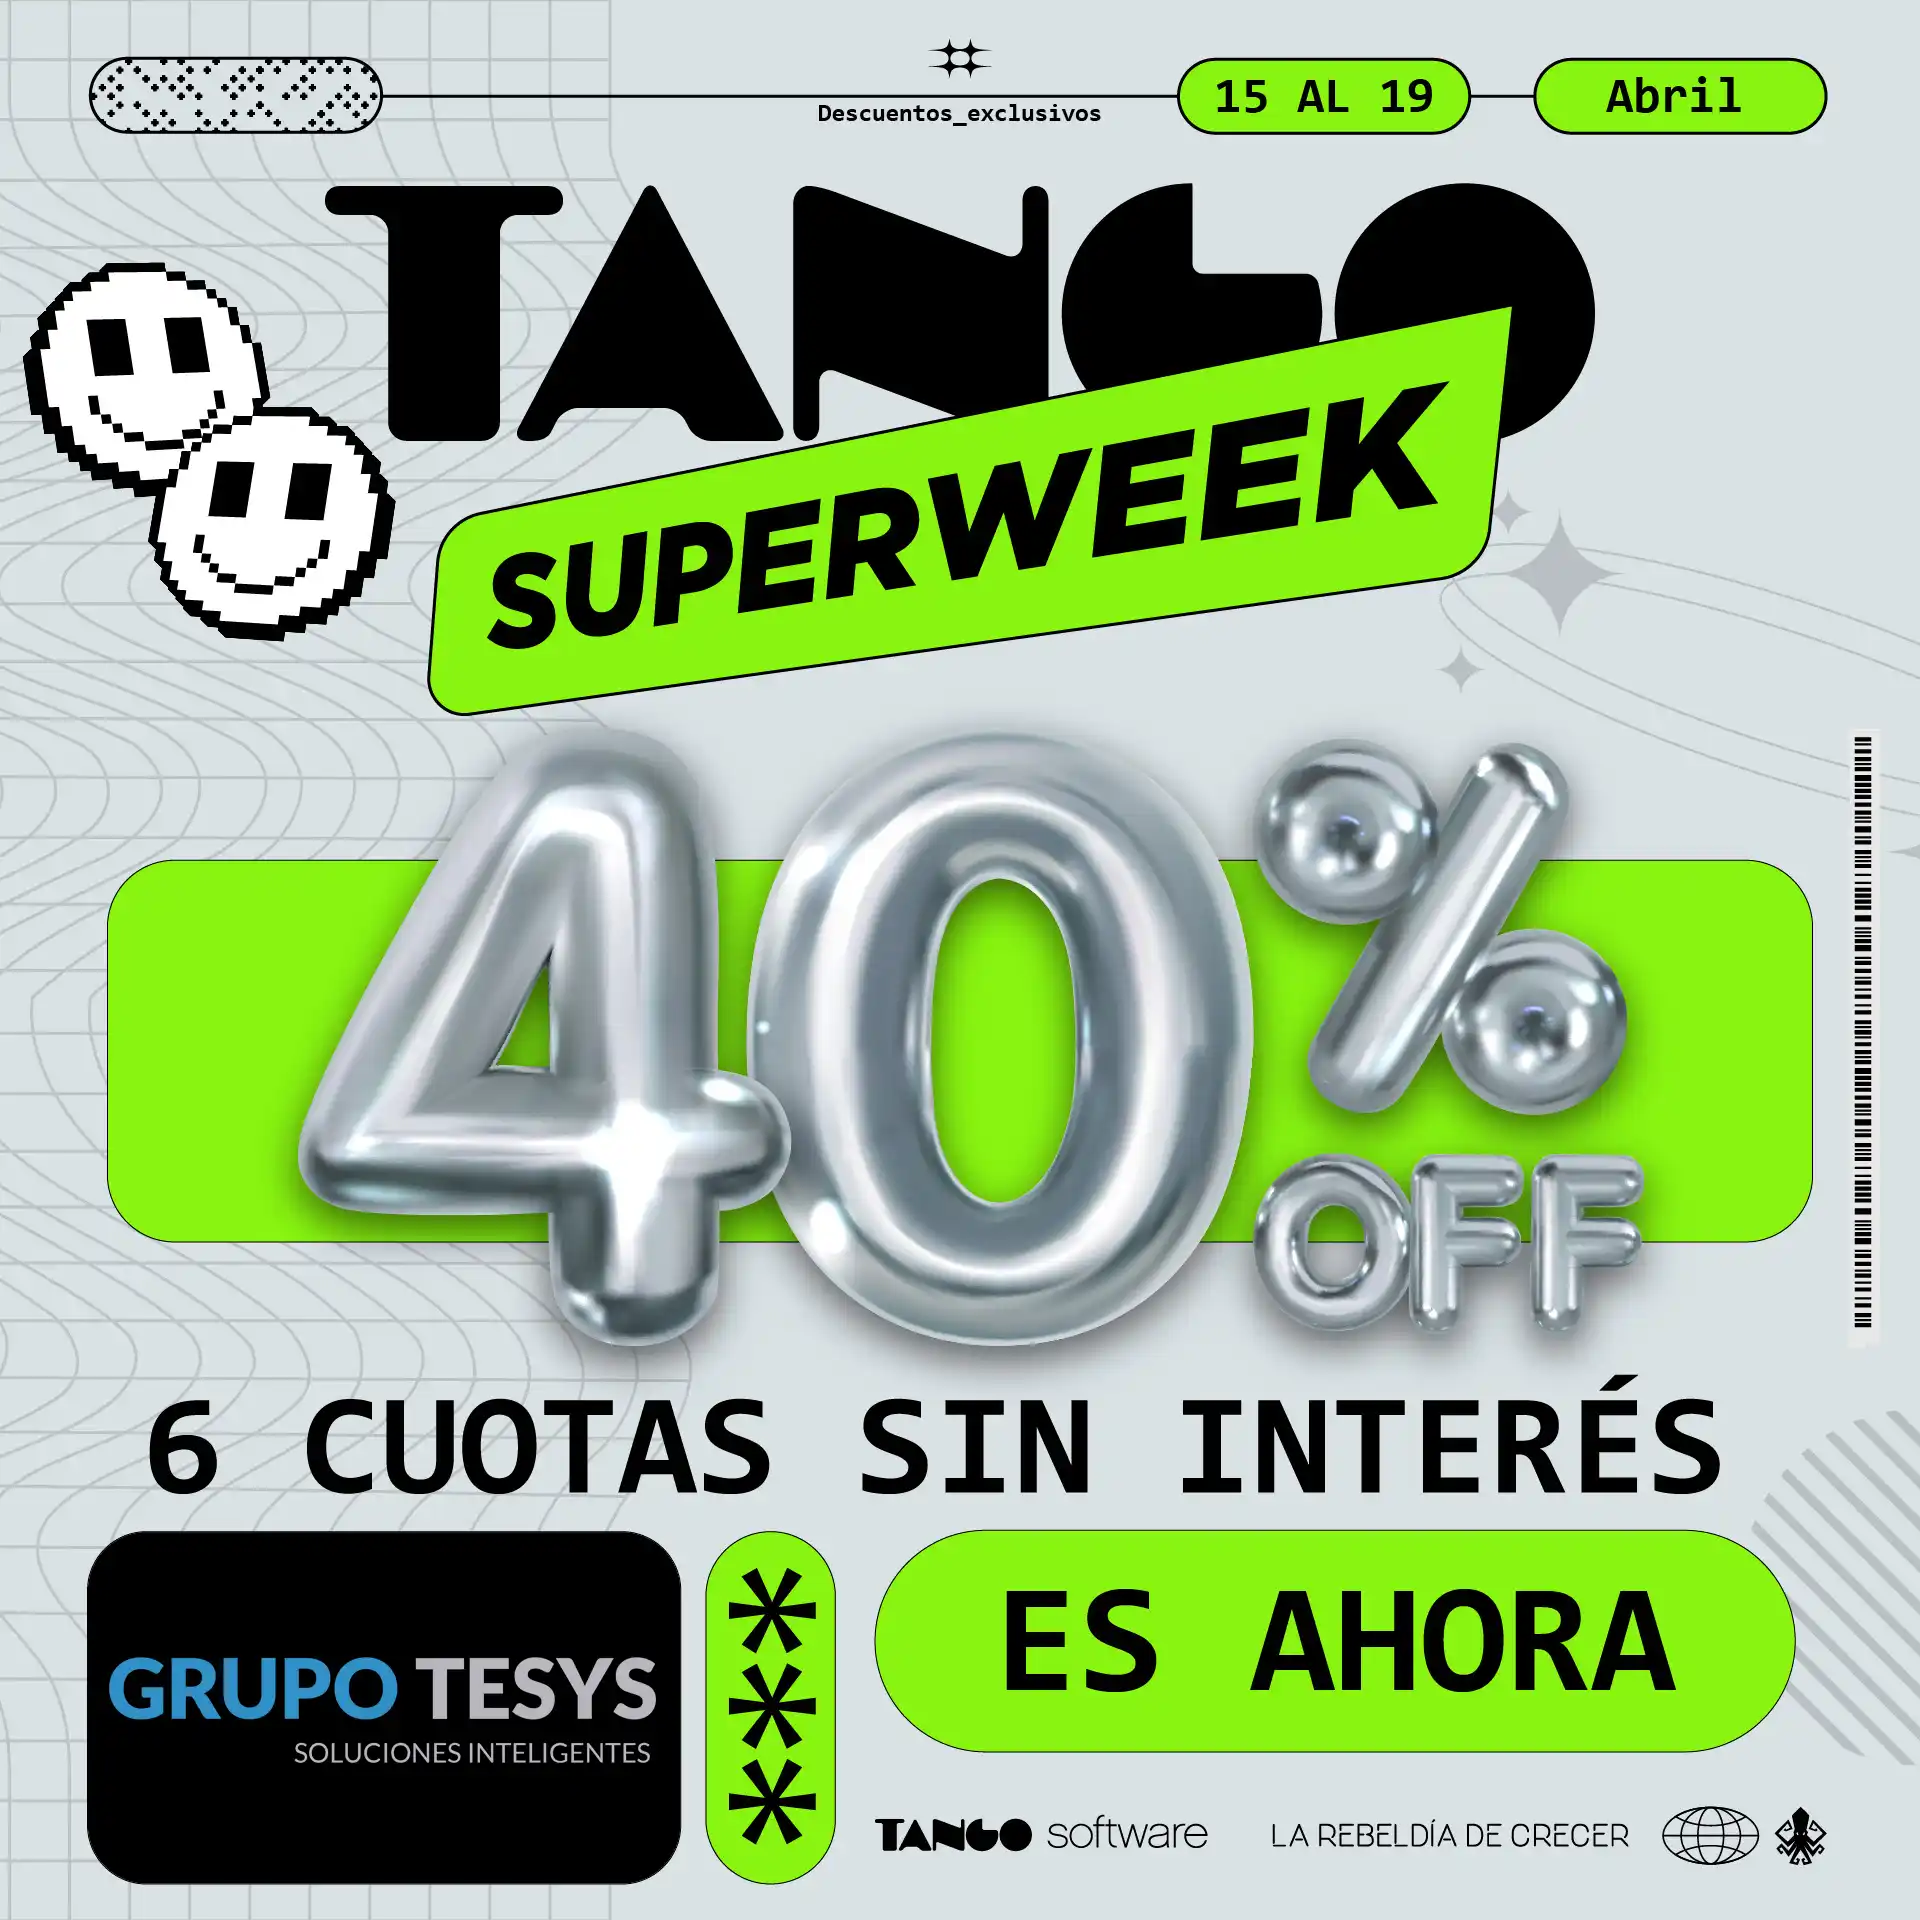 Super week Tango